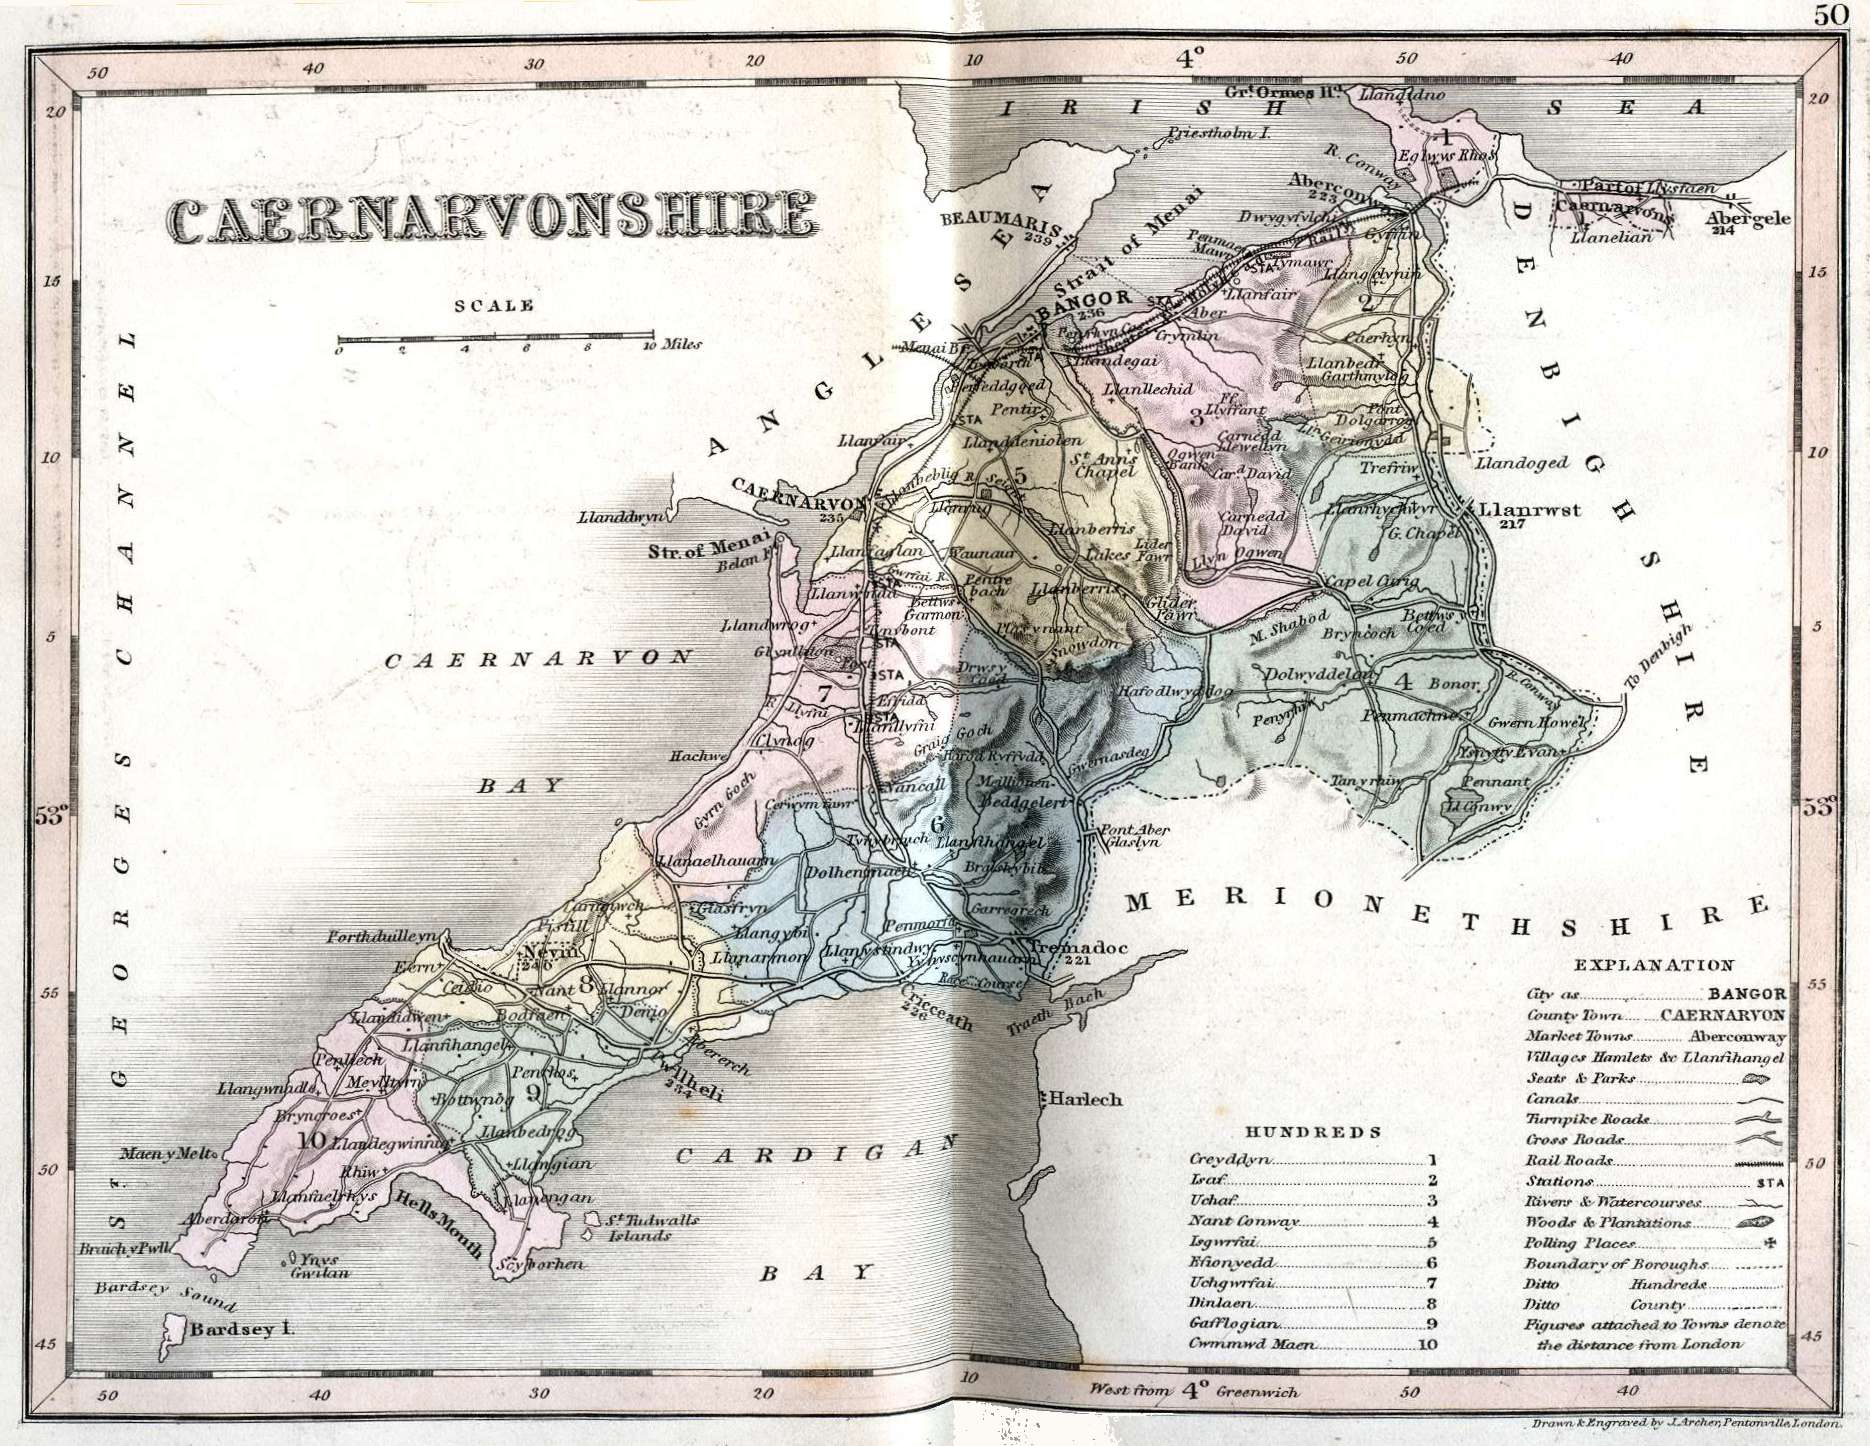 Caernarfonshire (430 K)